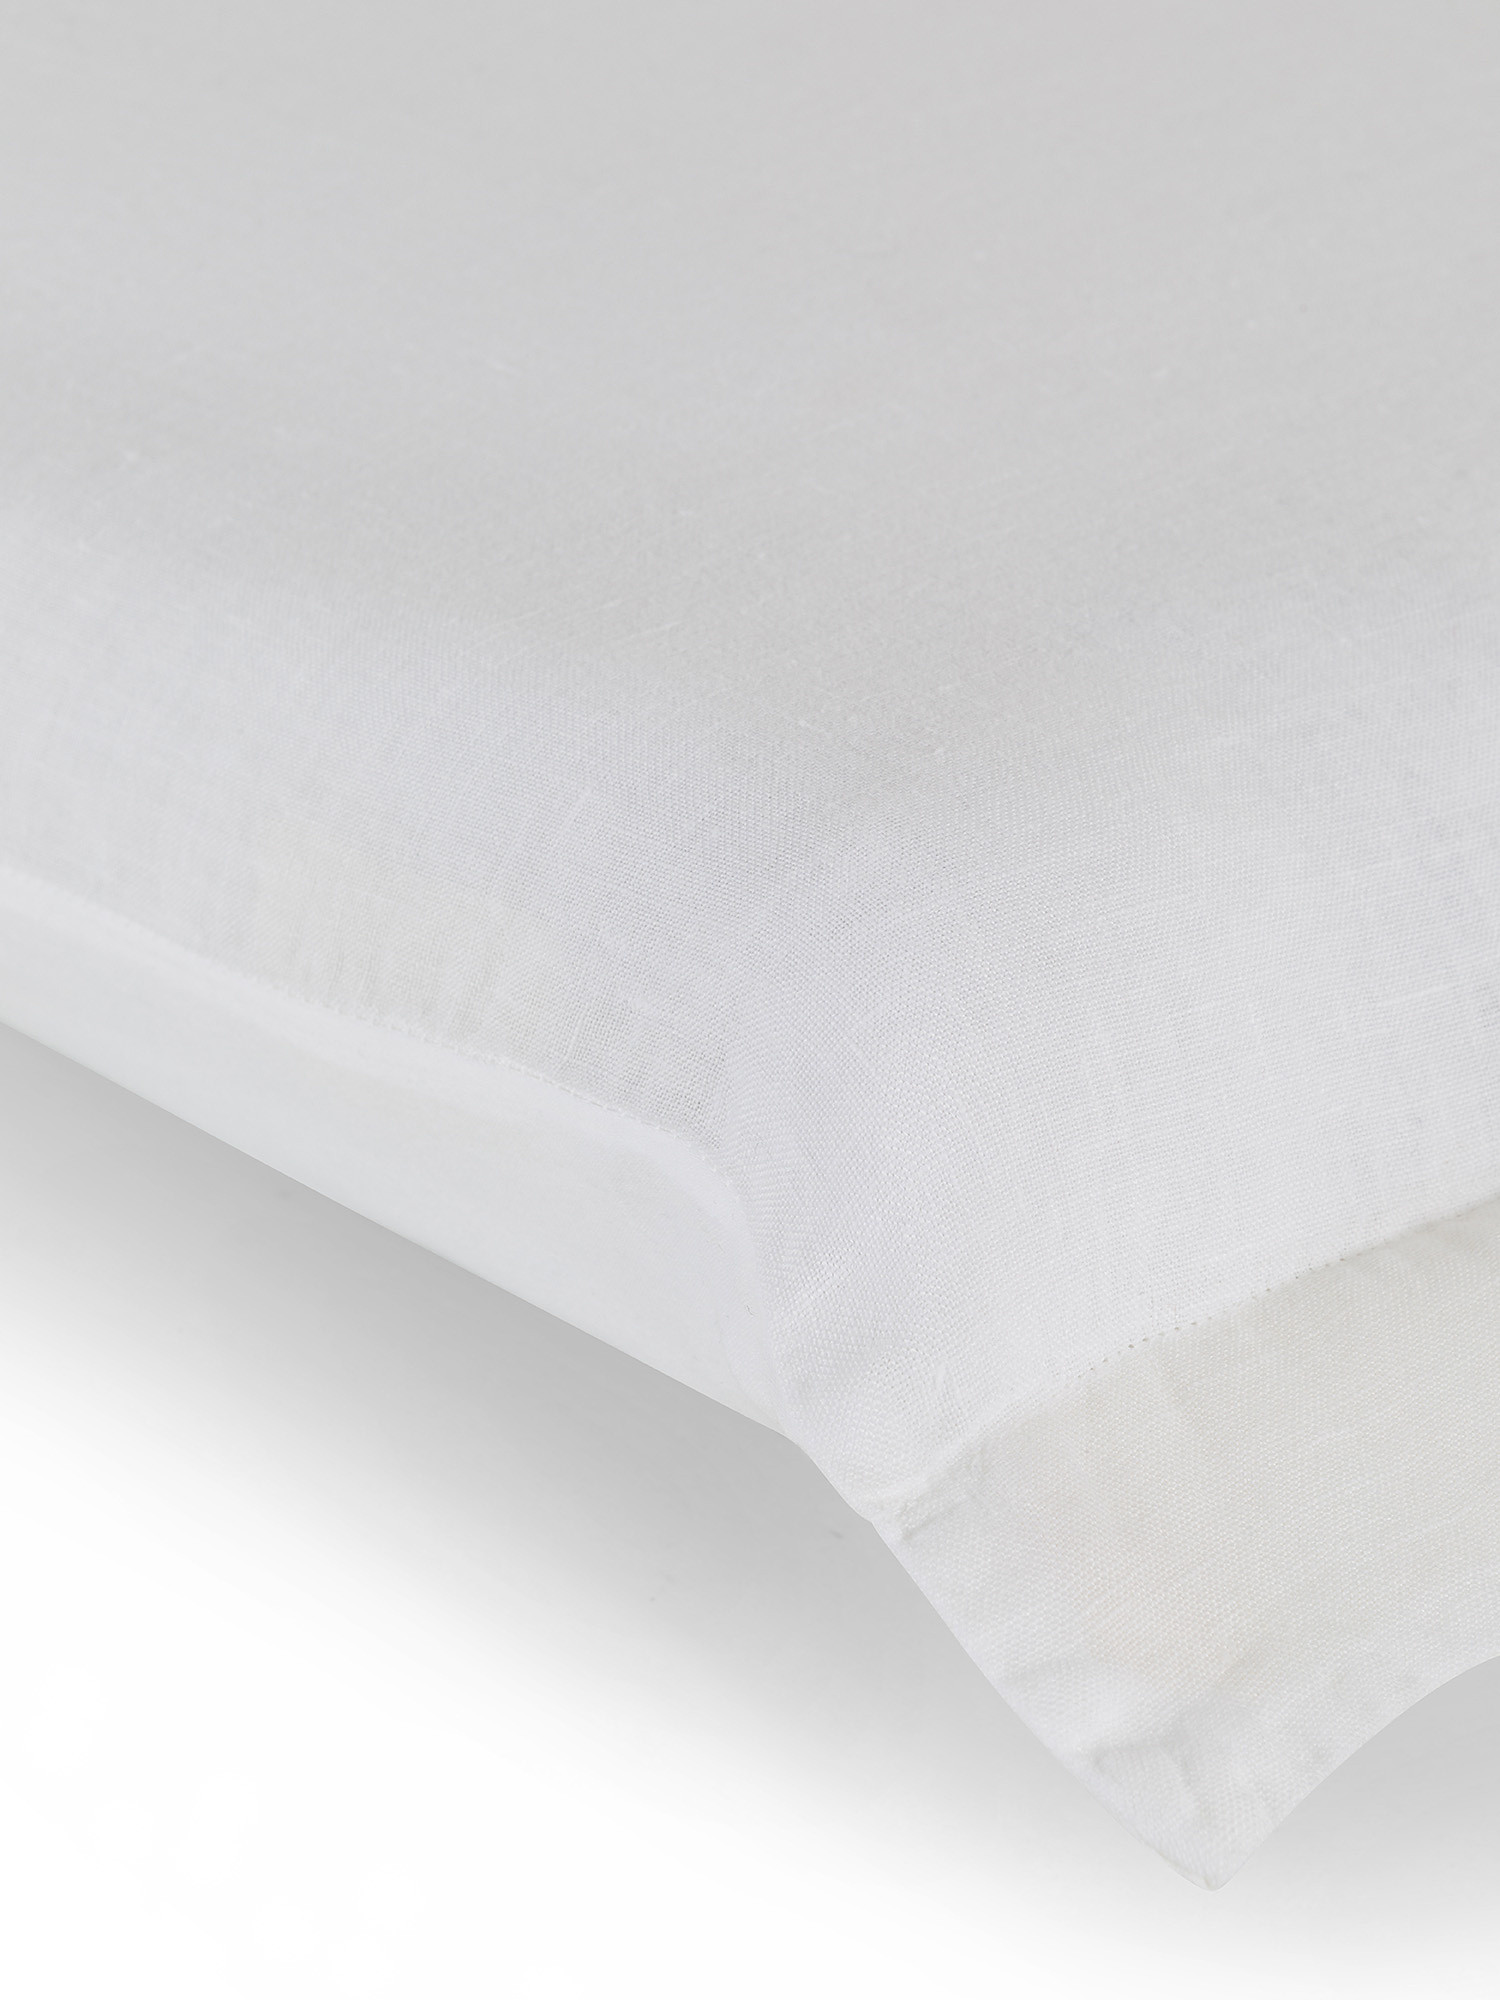 Zefiro plain color linen and cotton pillowcase, White, large image number 1